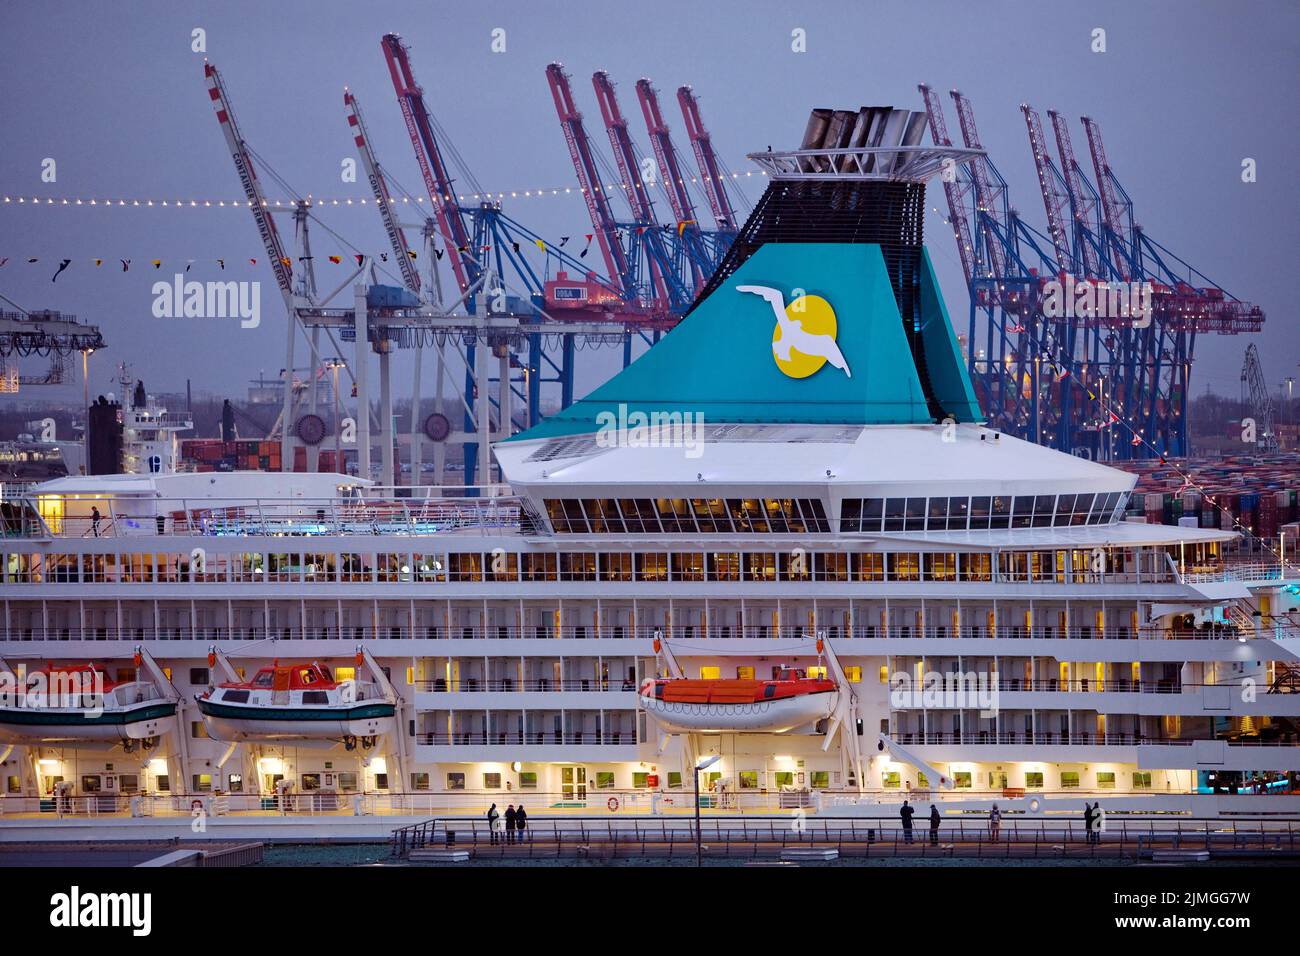 Cruise ship Artania, Hamburg Cruise Center Altona with the harbor cranes, Hamburg, Germany, Europe Stock Photo